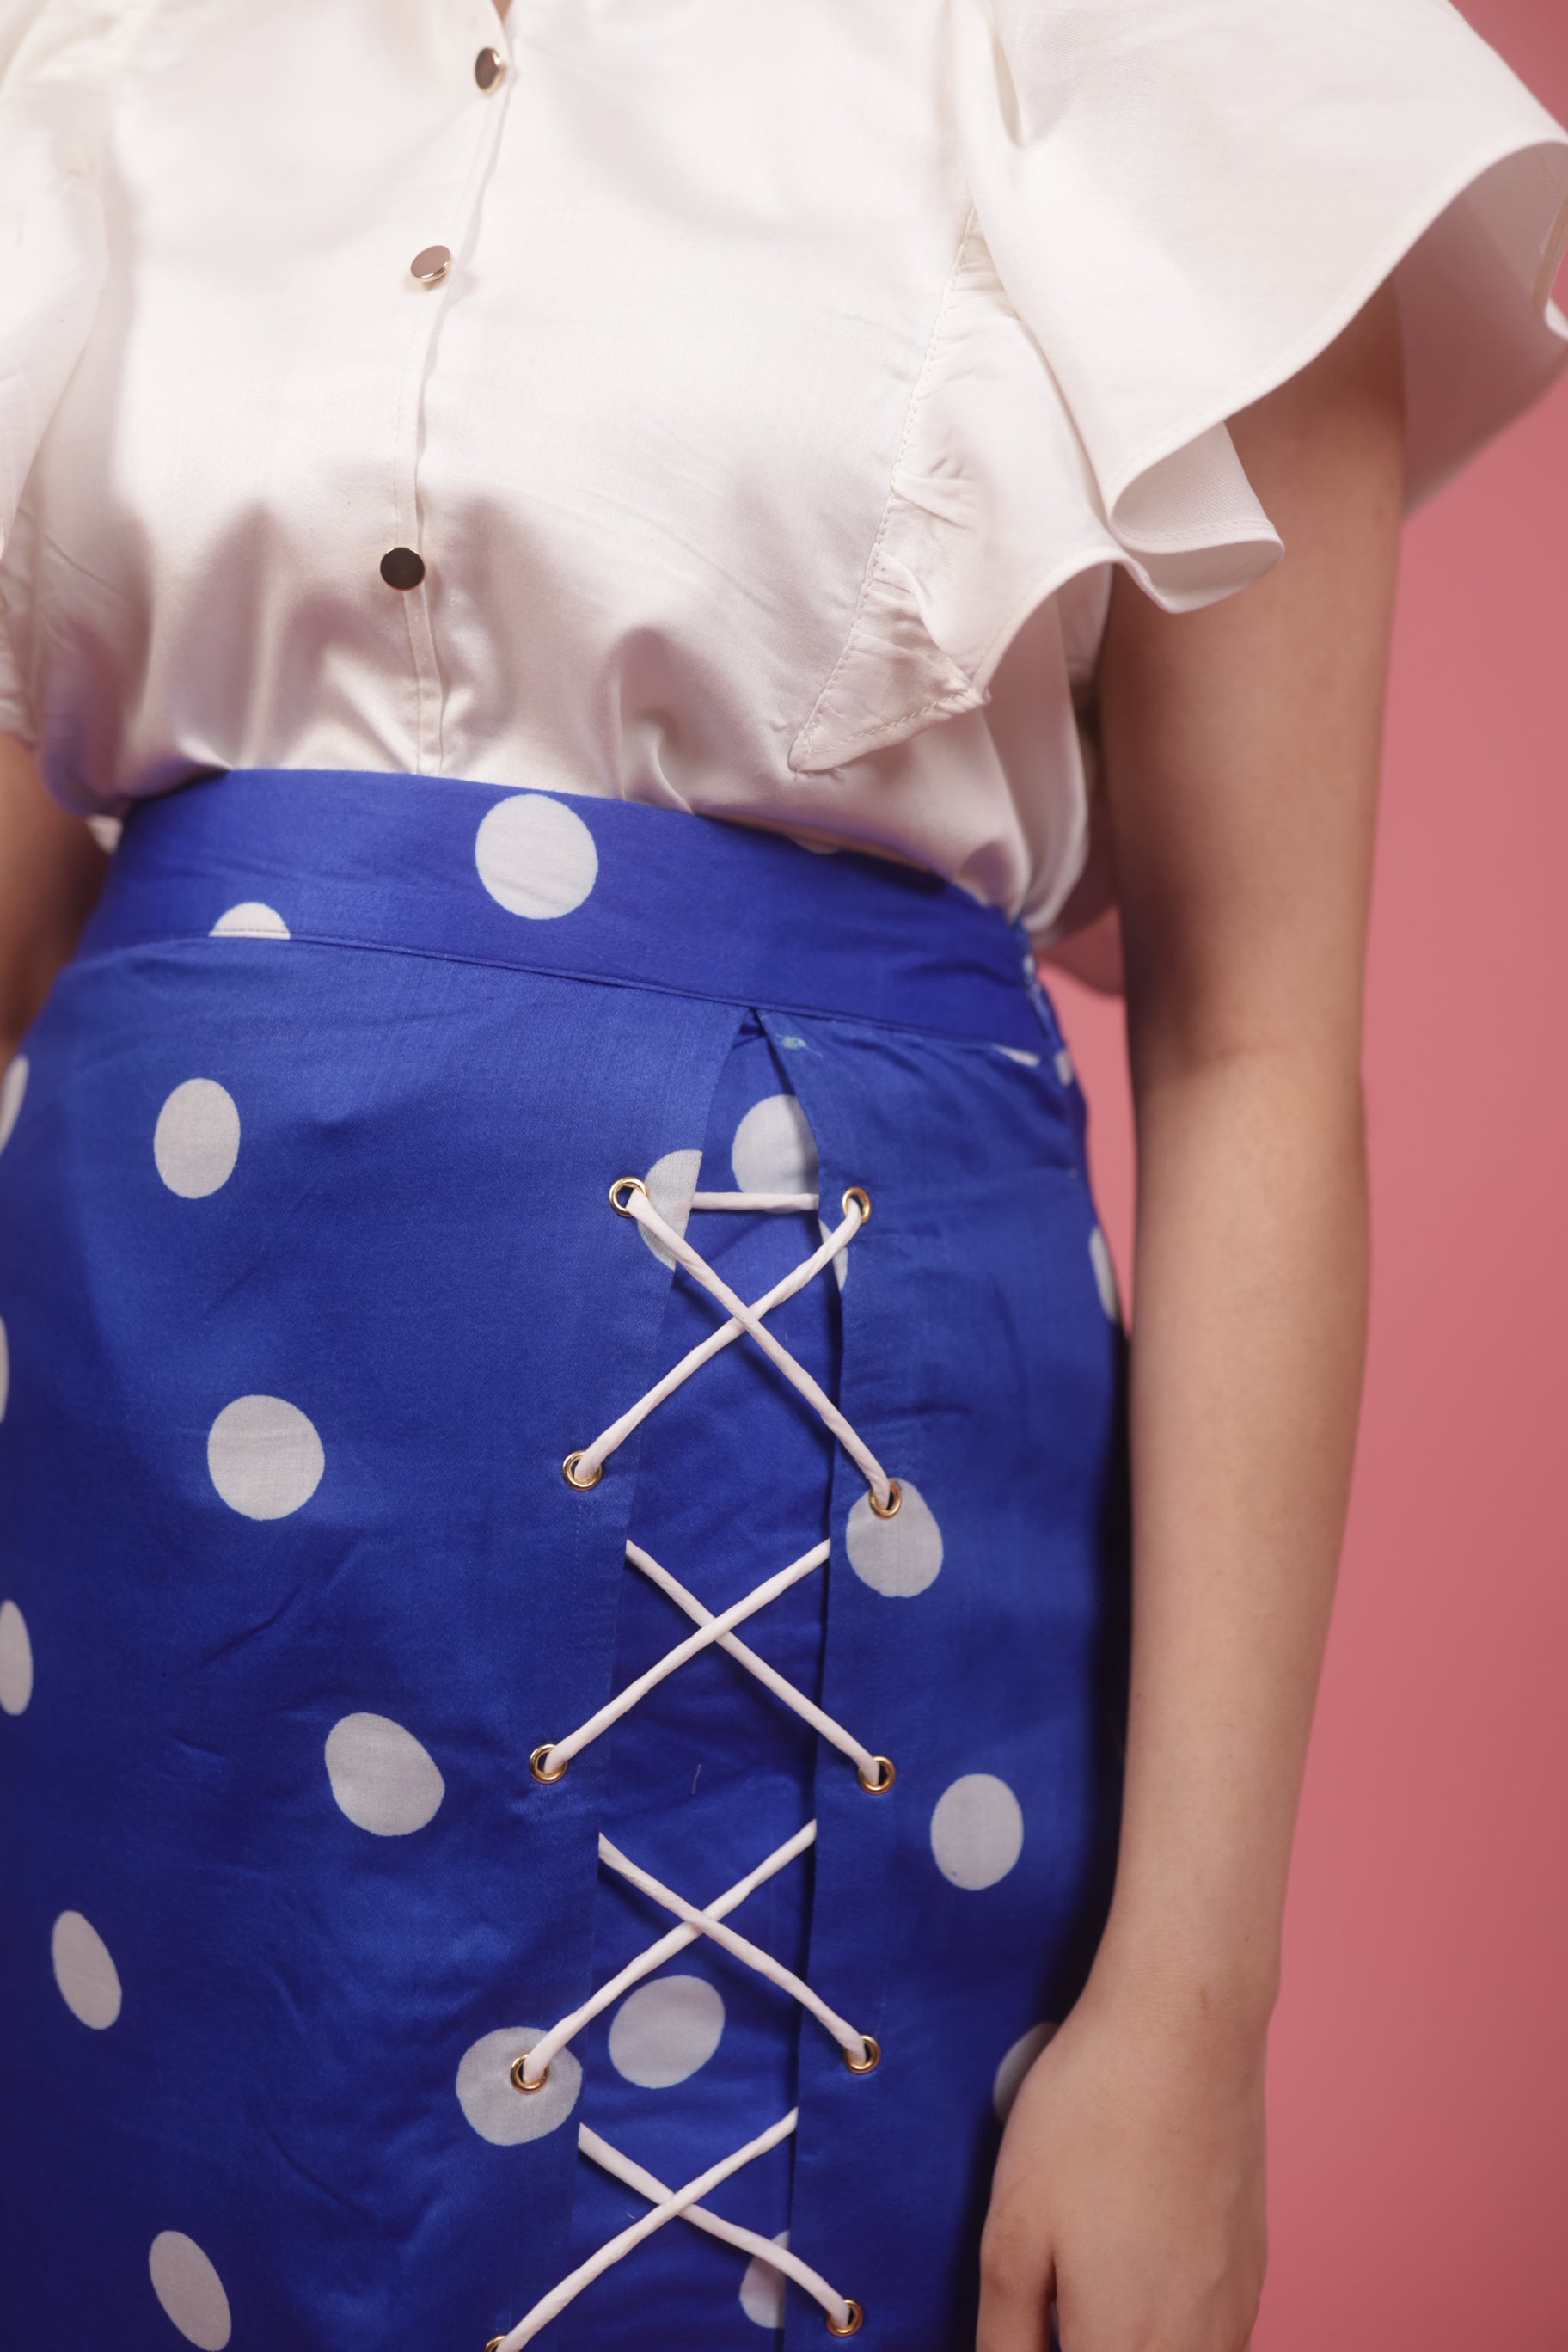 Blue Polka Skirt with Ruffle White Top